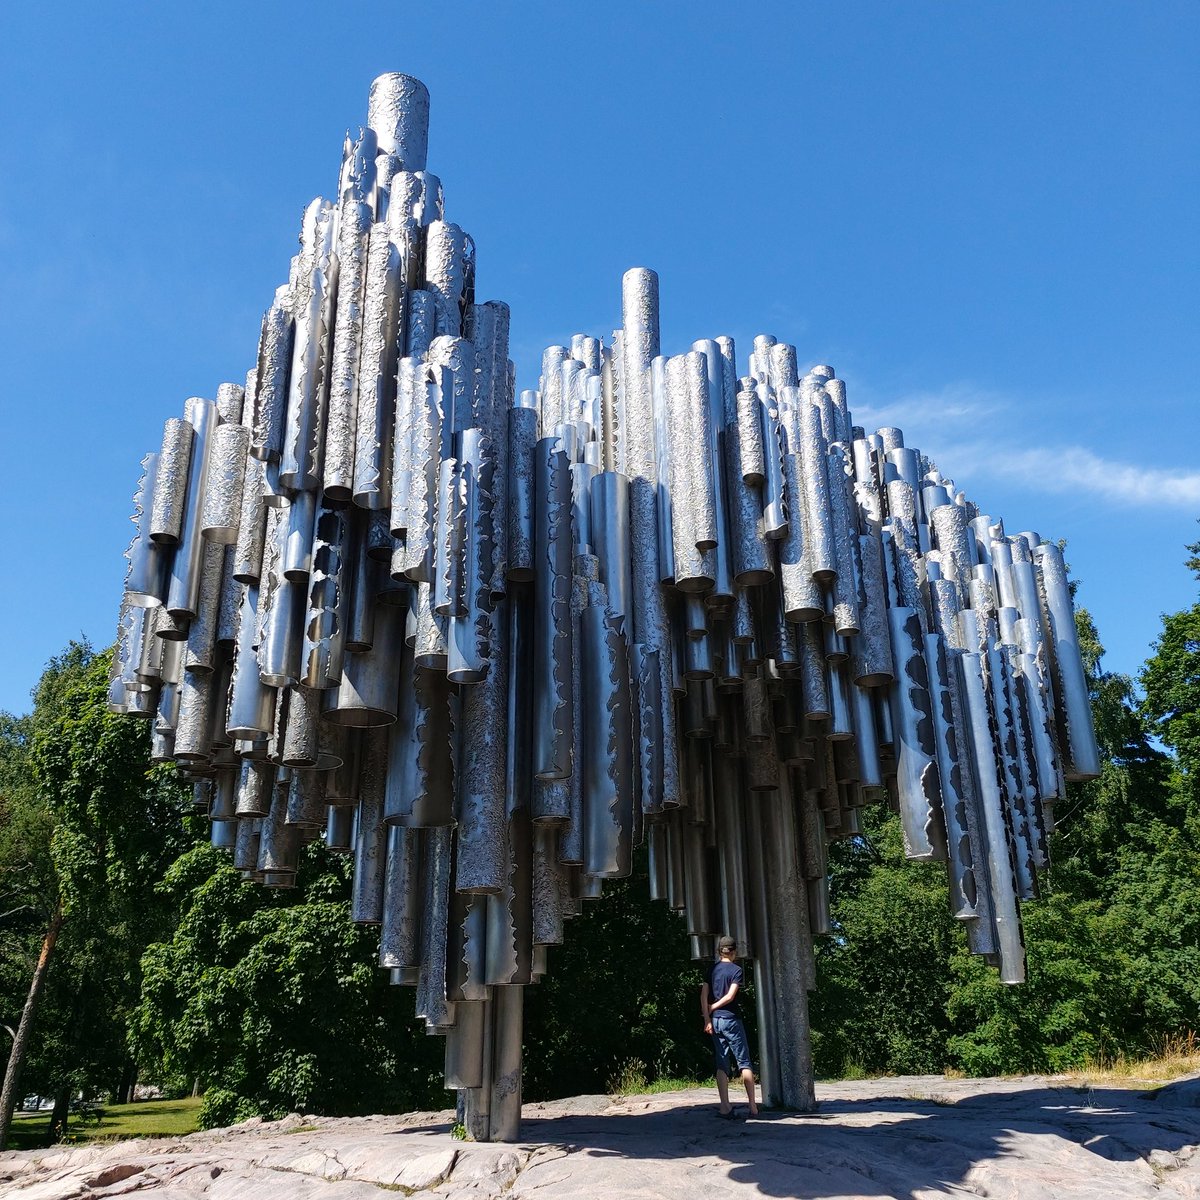 RT @rmkinnunen: Visit to the Sibelius Monument created by Eila Hiltunen. #Helsinki https://t.co/3YxxyM3um9